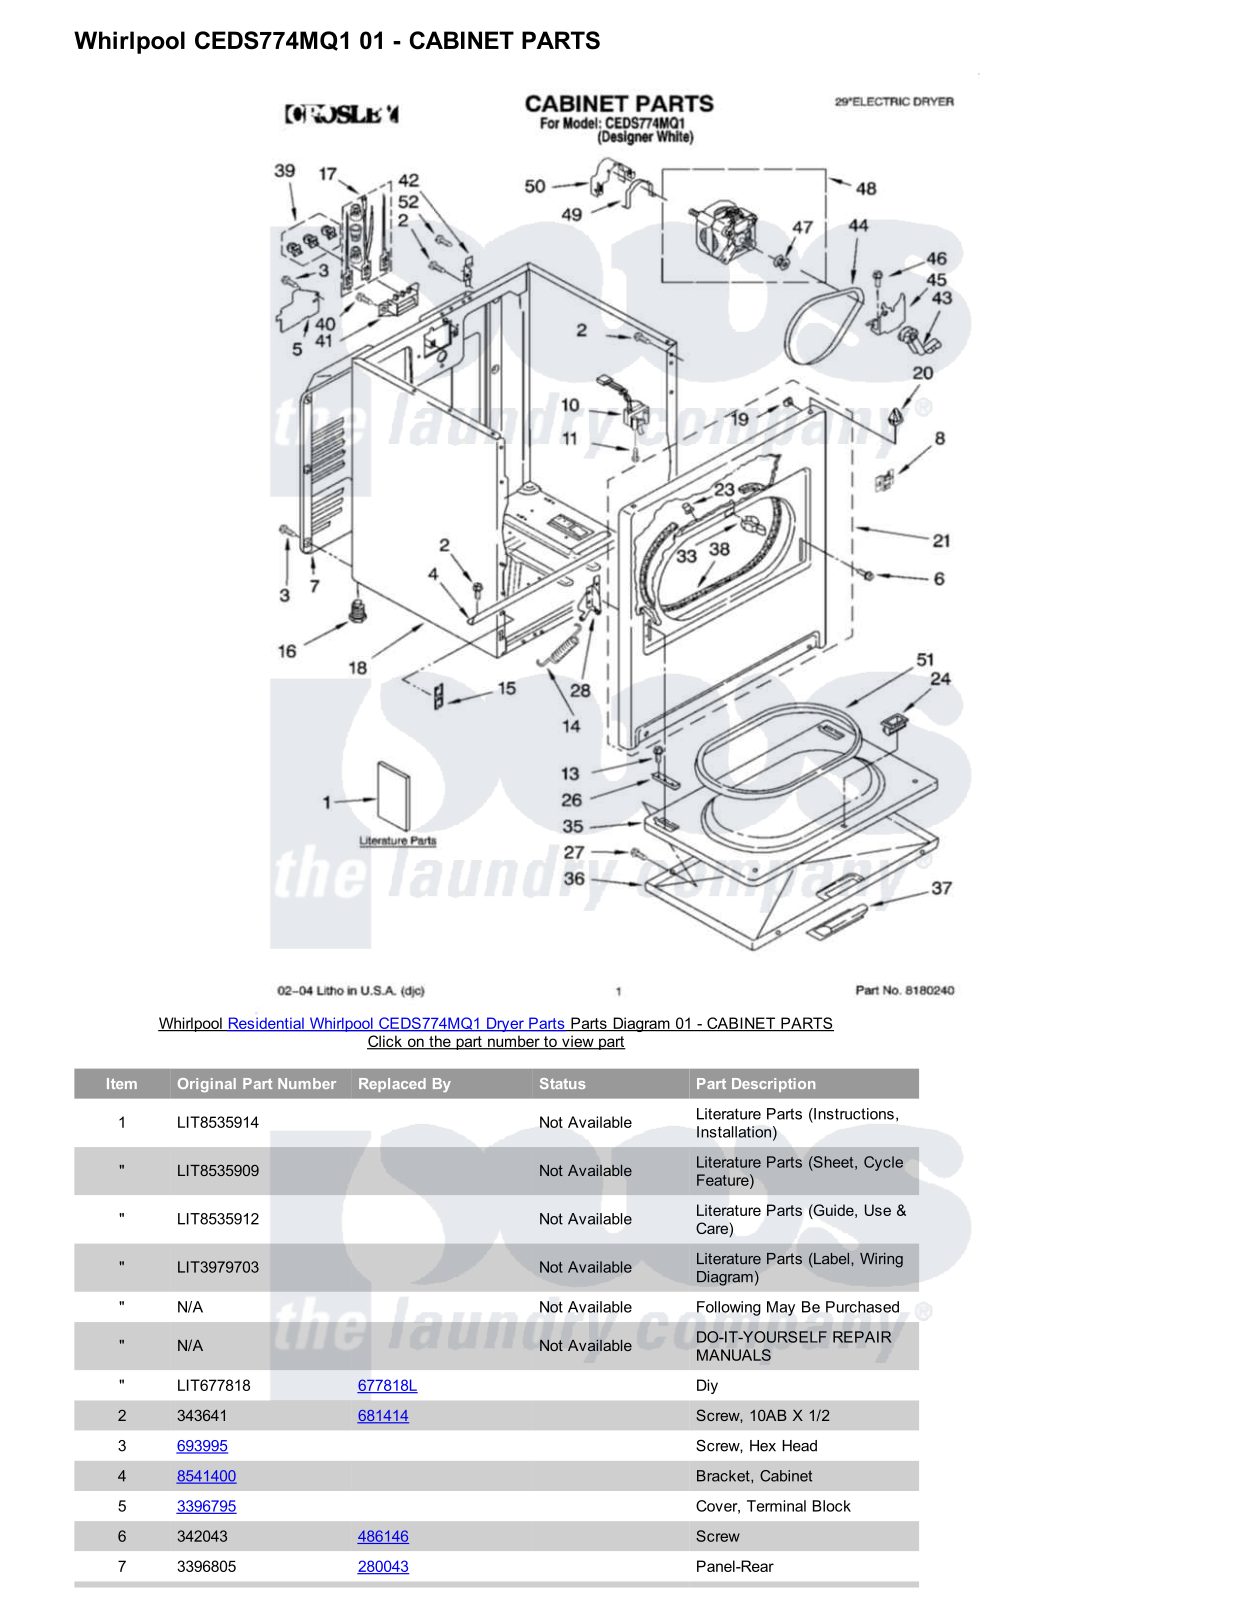 Whirlpool CEDS774MQ1 Parts Diagram